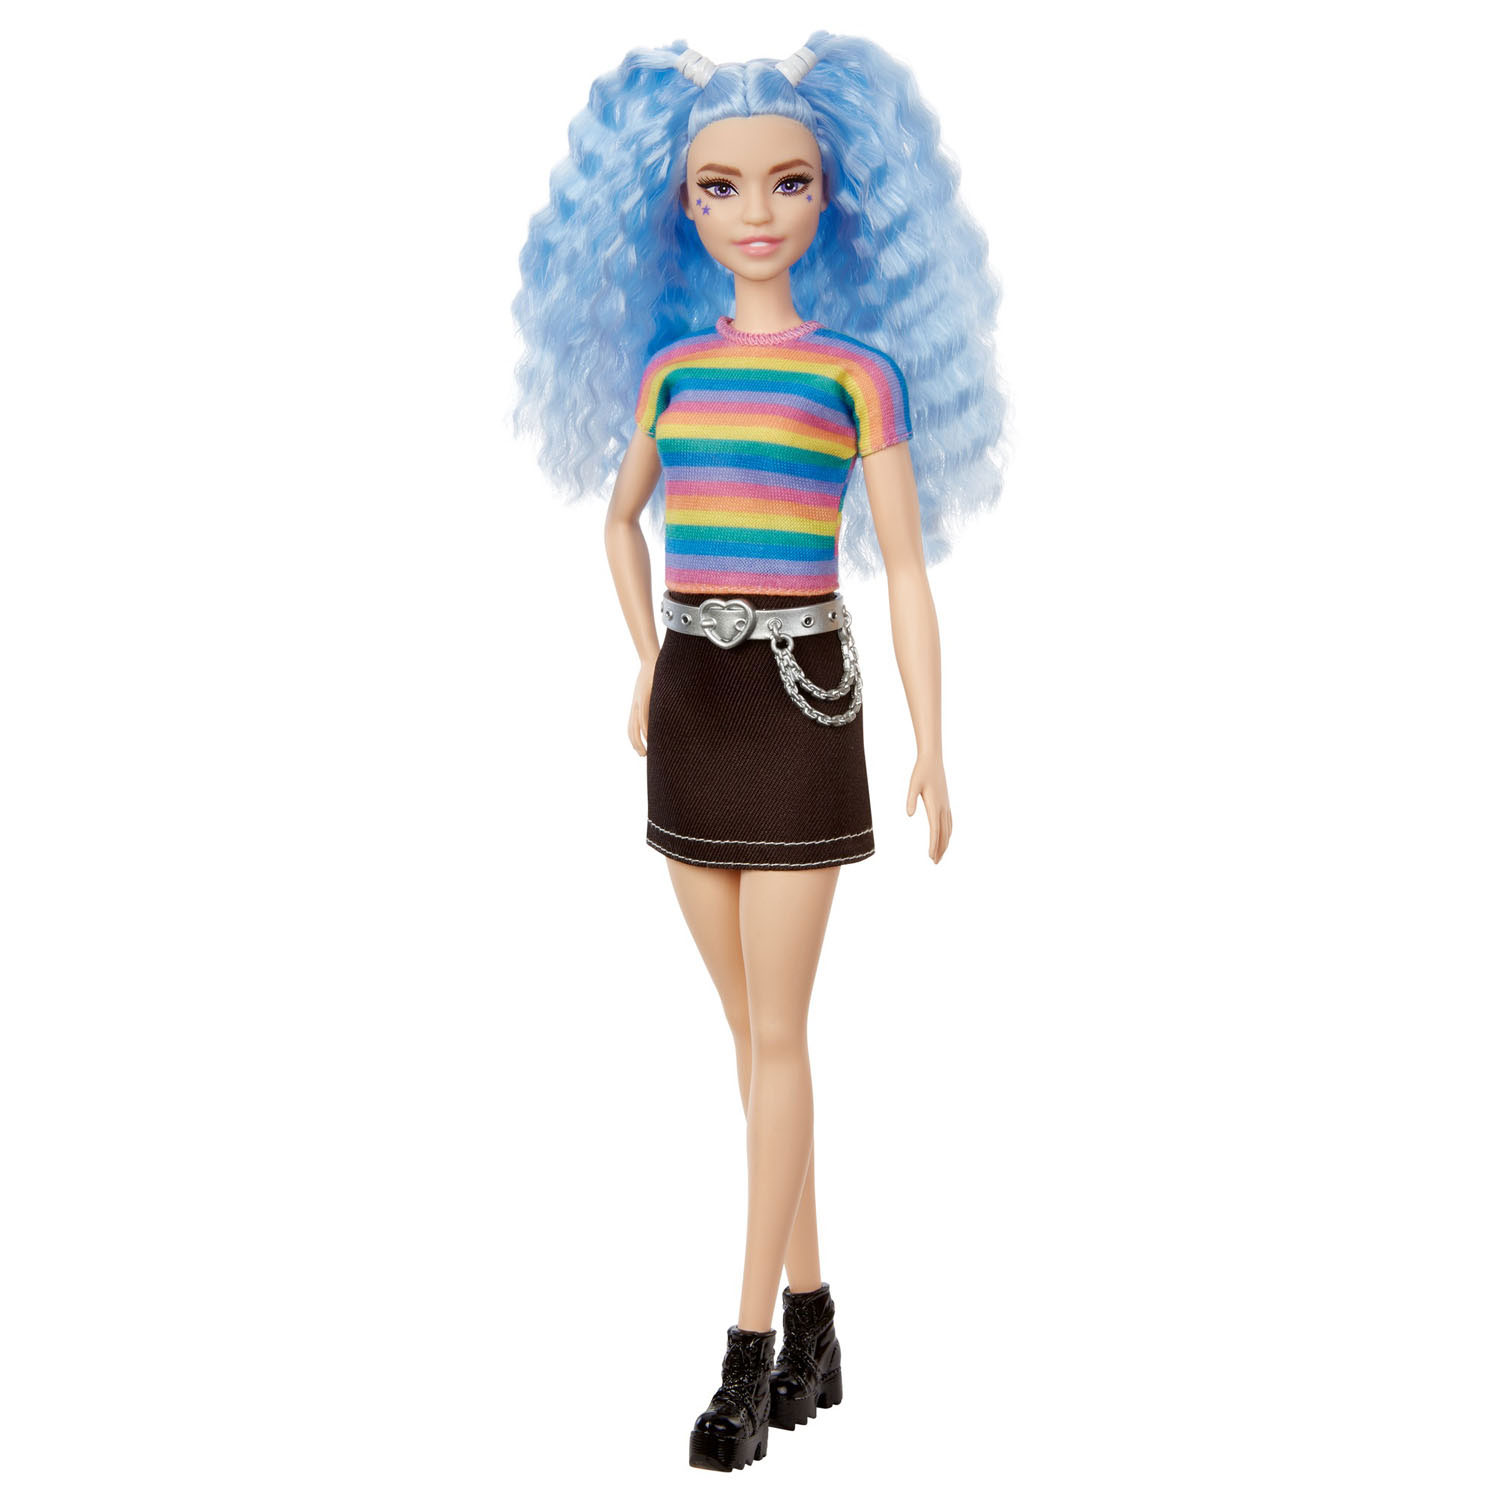 Glimp Karu ruw Barbie Fashionista Doll - Rainbow Top & Black Skirt | Thimble Toys